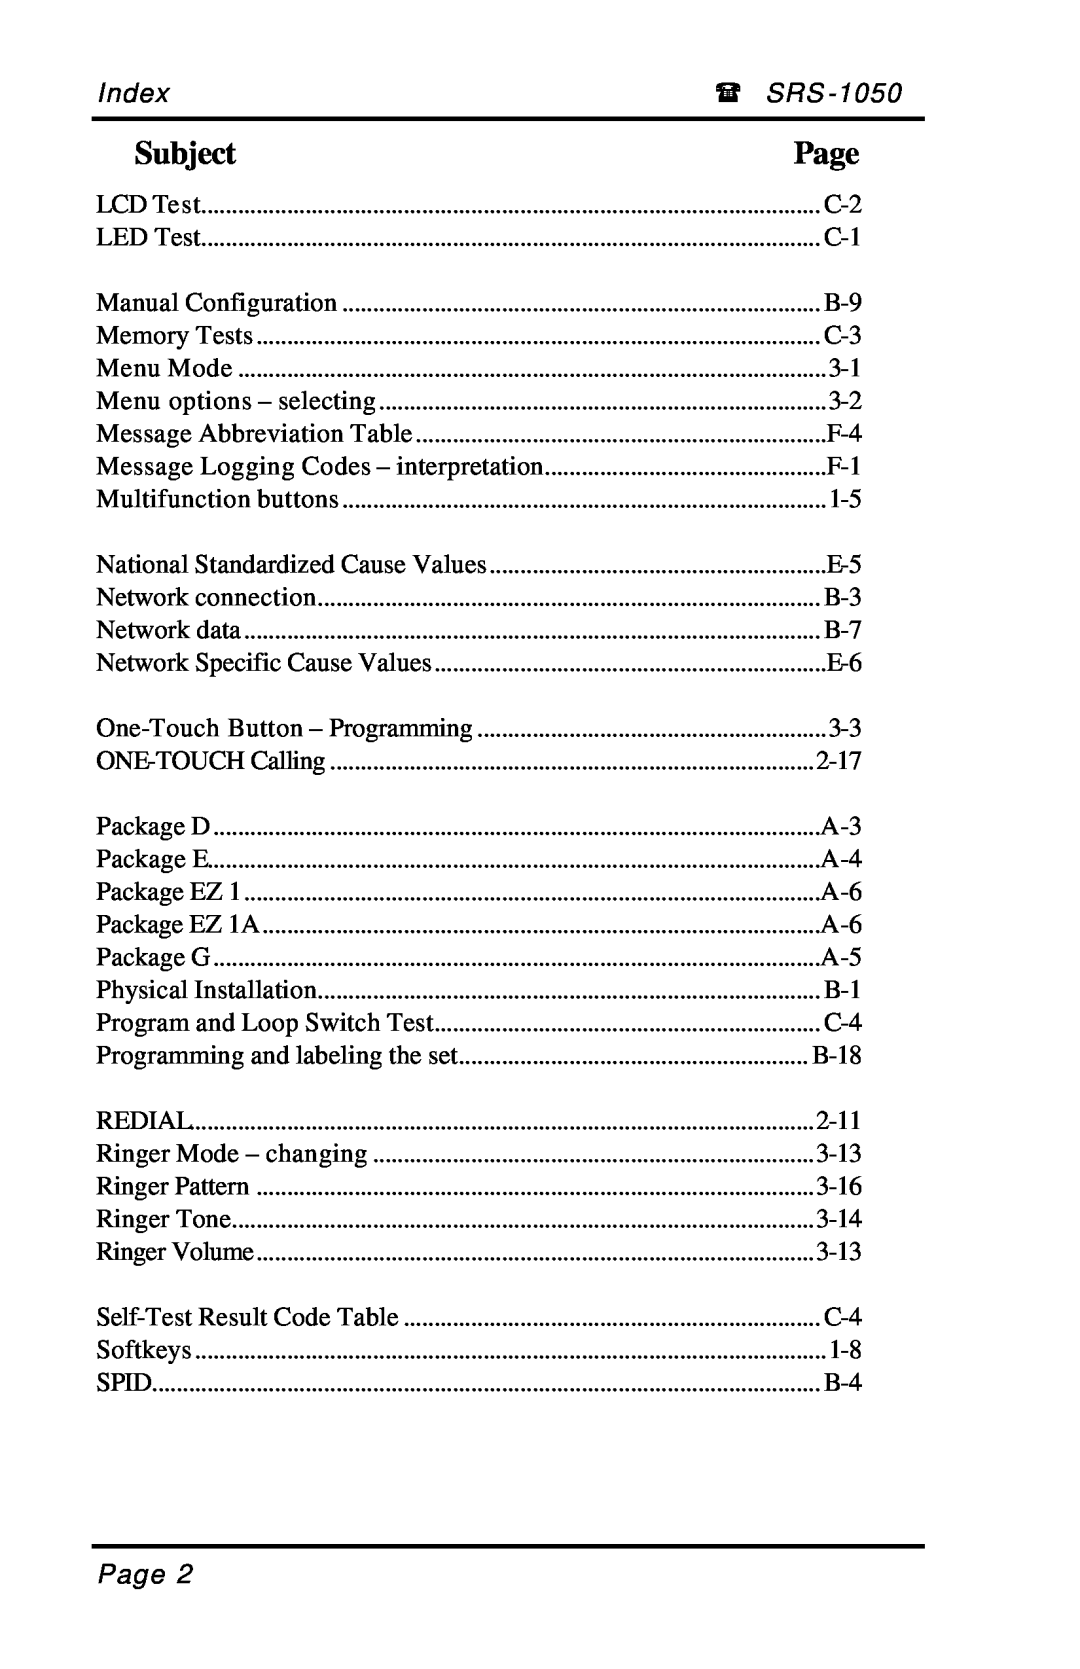 Fujitsu SRS-1050 manual Subject, Page, Message Logging Codes - interpretation, National Standardized Cause Values 